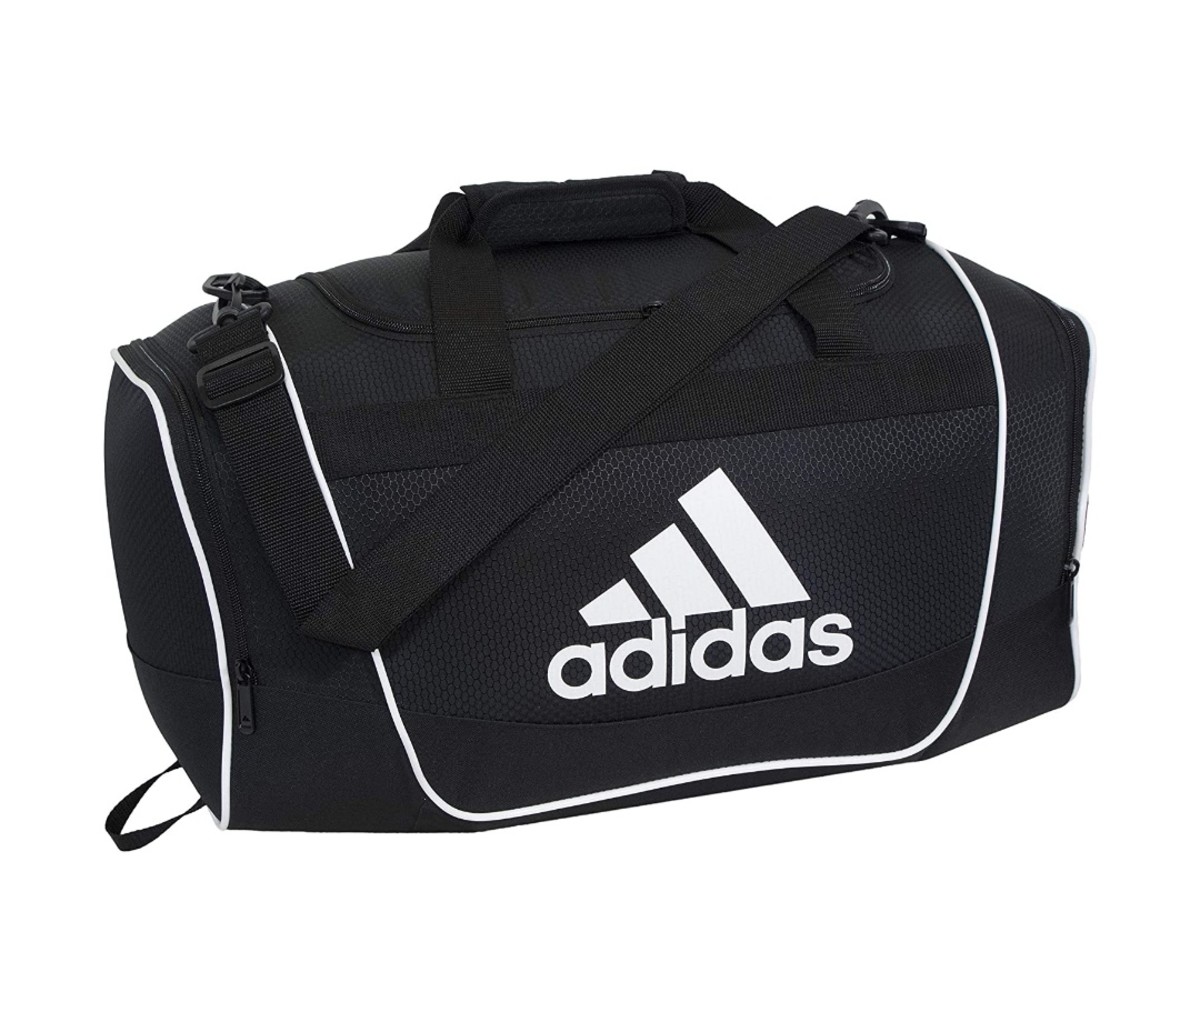 Adidas Defender II duffel bag